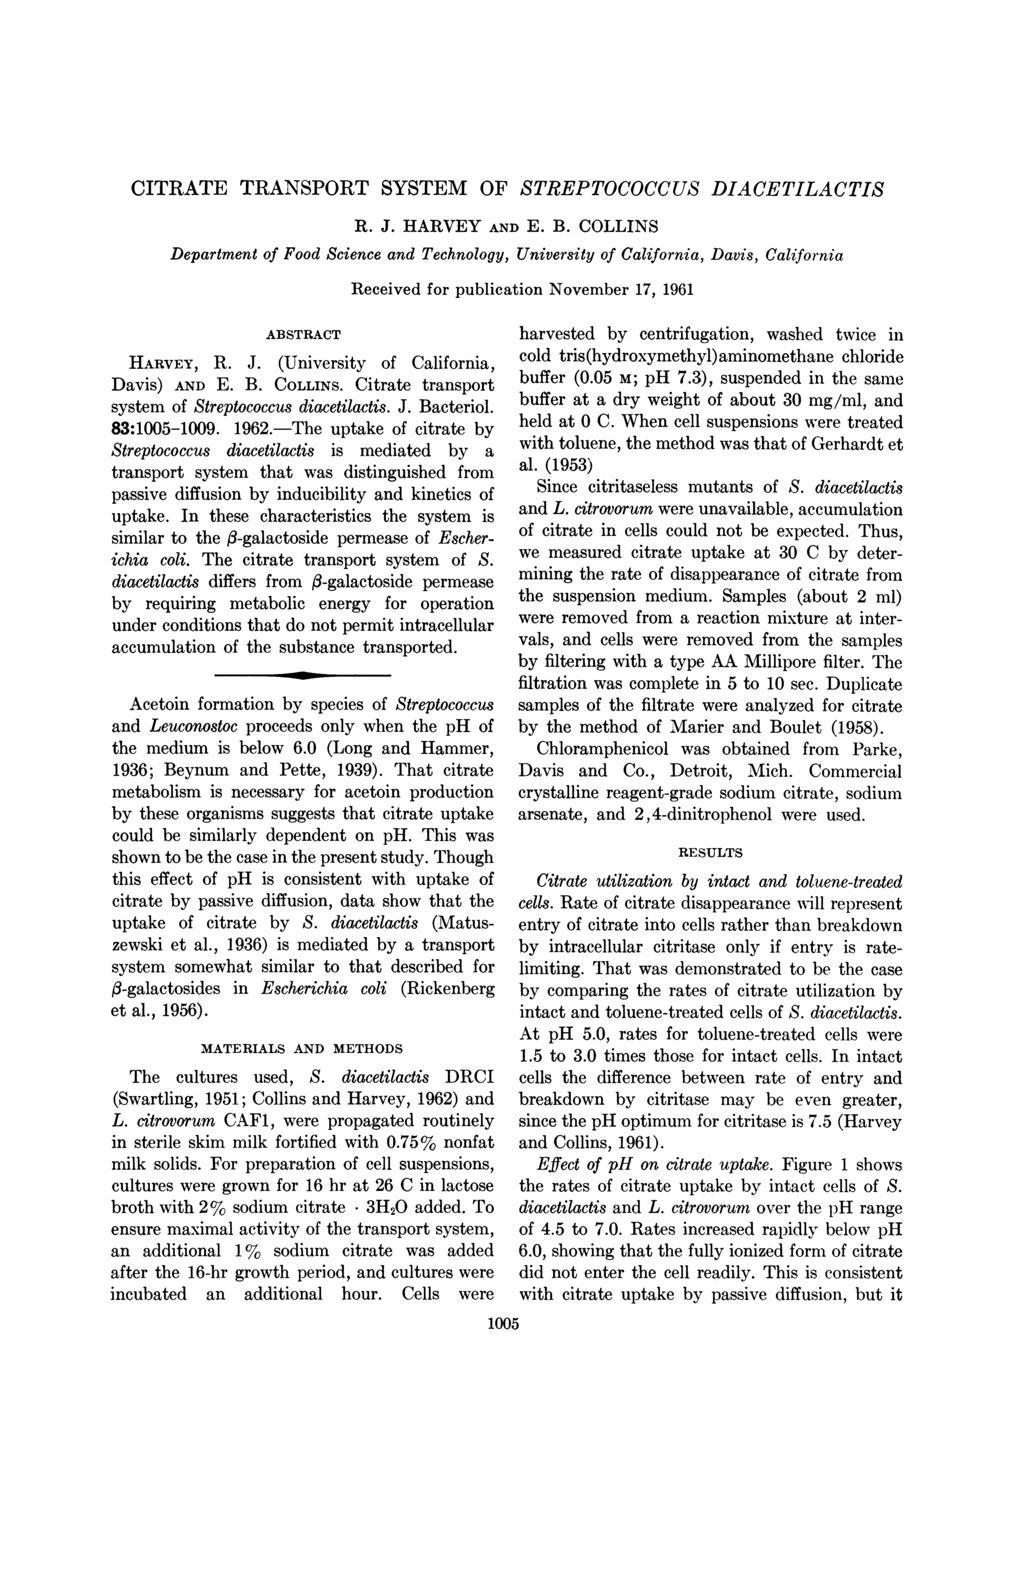 CITRAT TRANSPORT SYSTM OF STRPTOCOCCUS DIACTILACTIS R. J. HARVY AND. B.